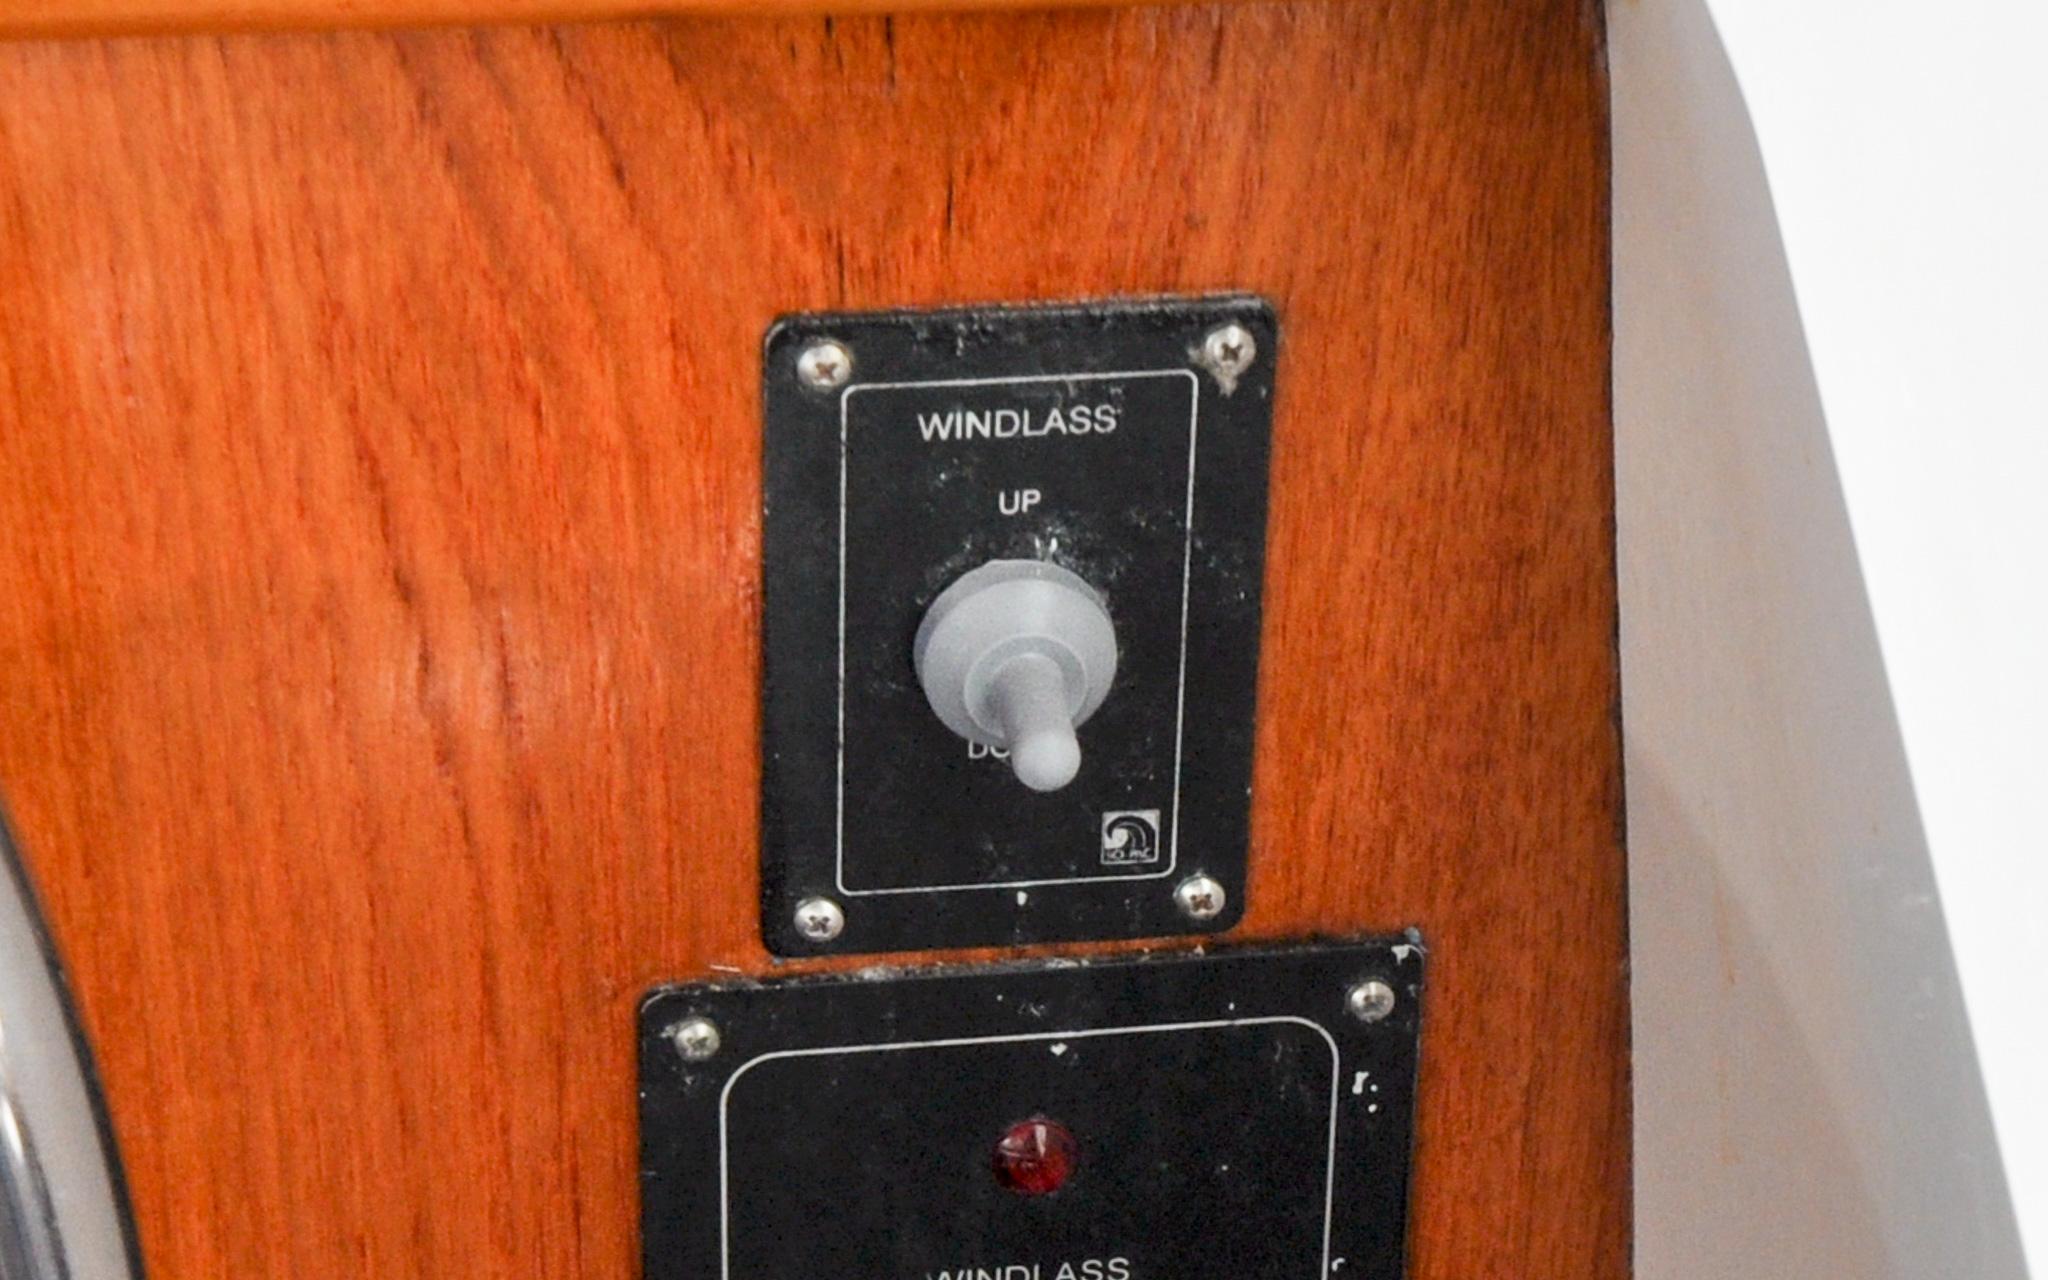 Wilbur 34 - Kingfisher - Pilot Salon - Helm Station - Remote Windlass Control 